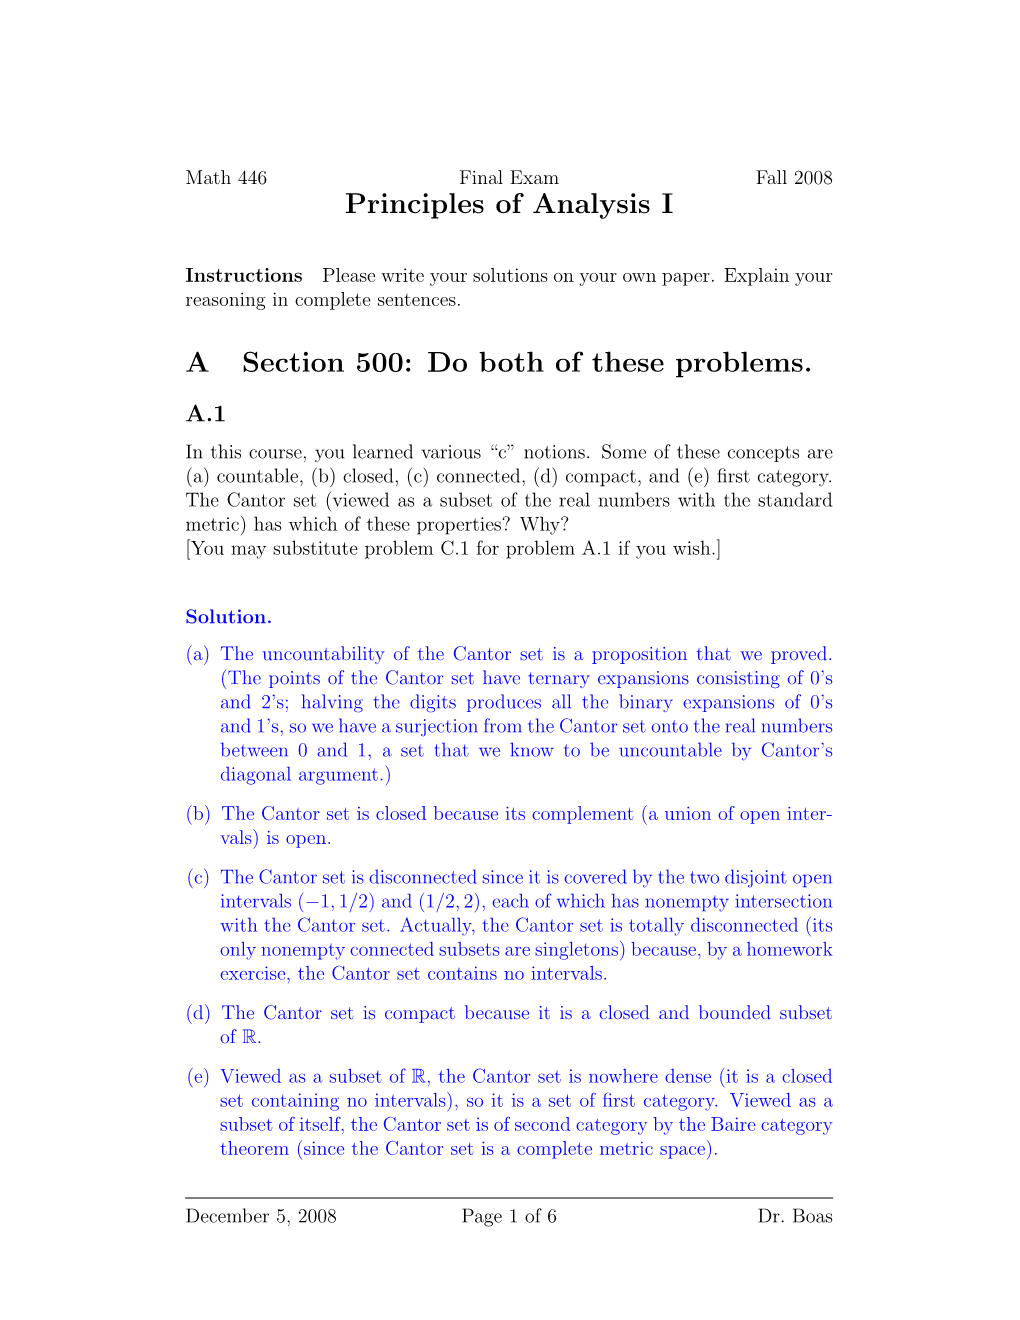 Final Exam Fall 2008 Principles of Analysis I